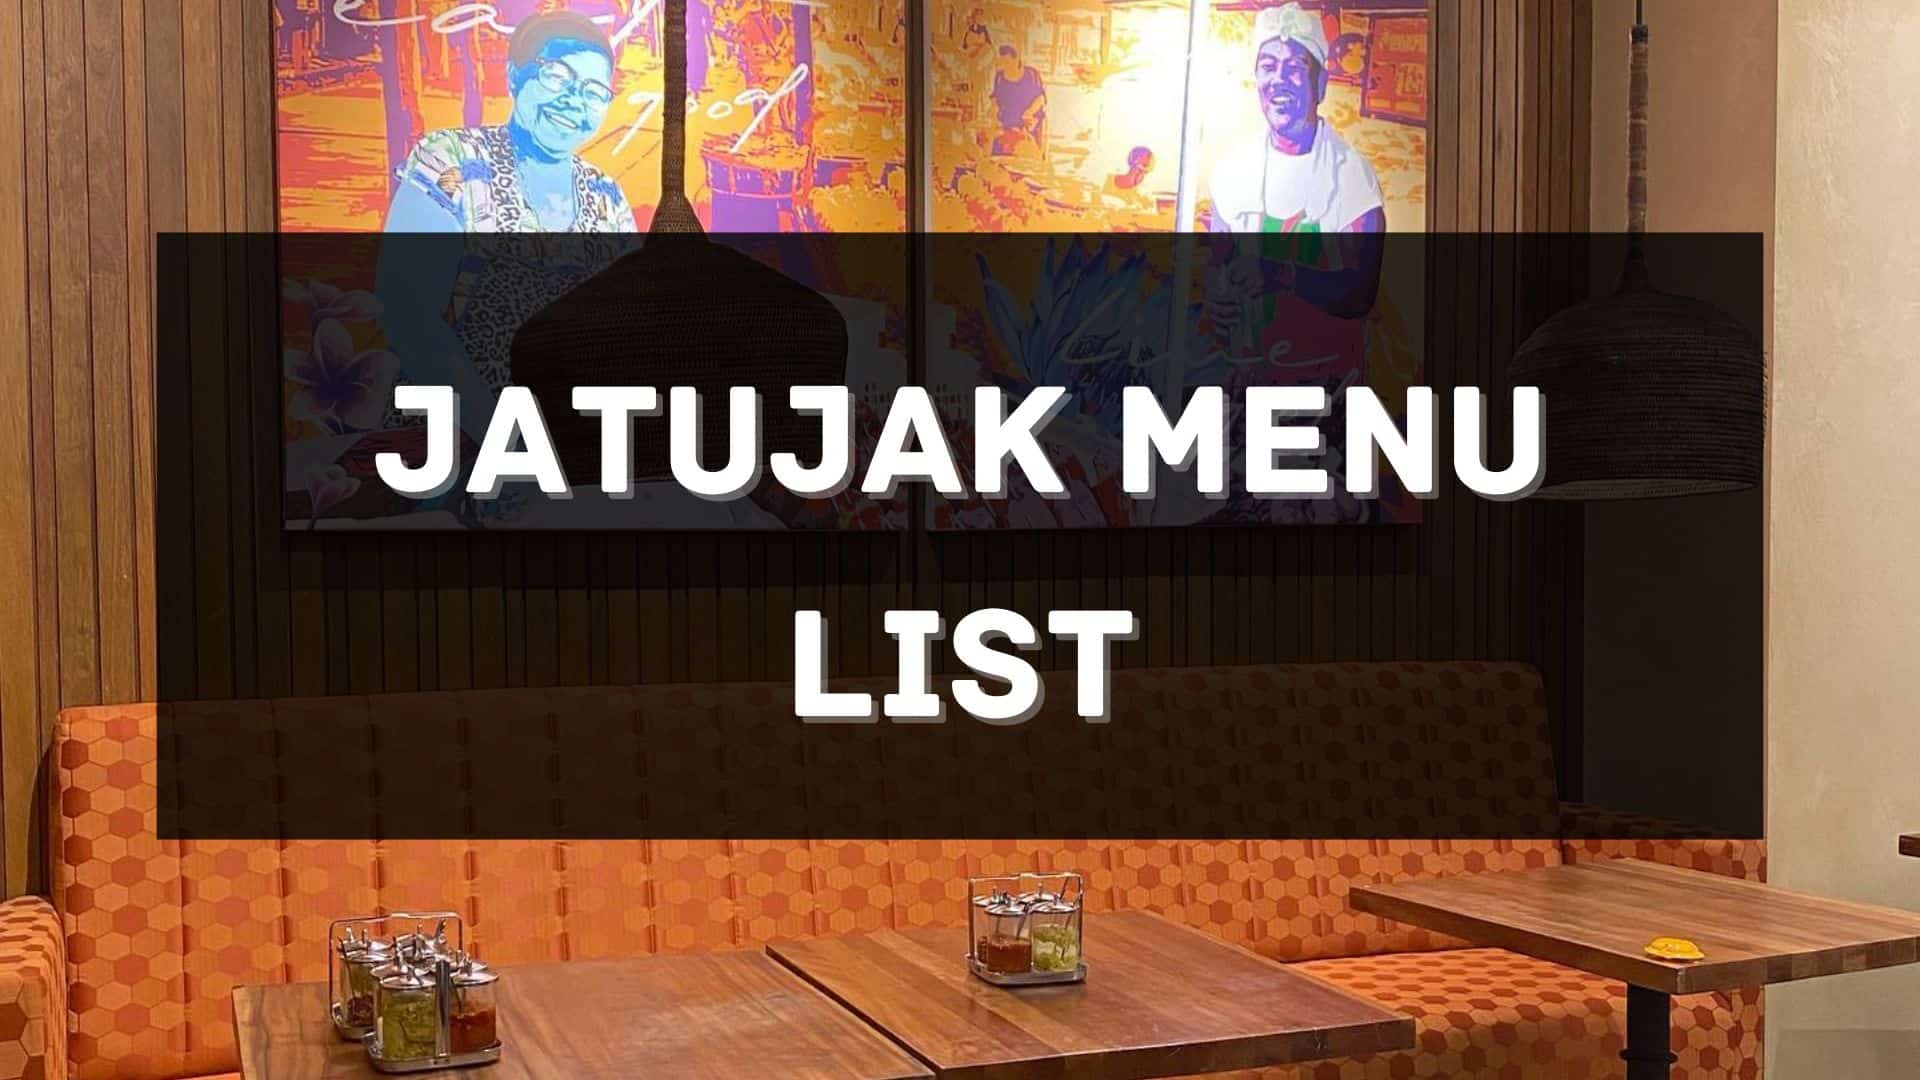 jatujak menu prices philippines